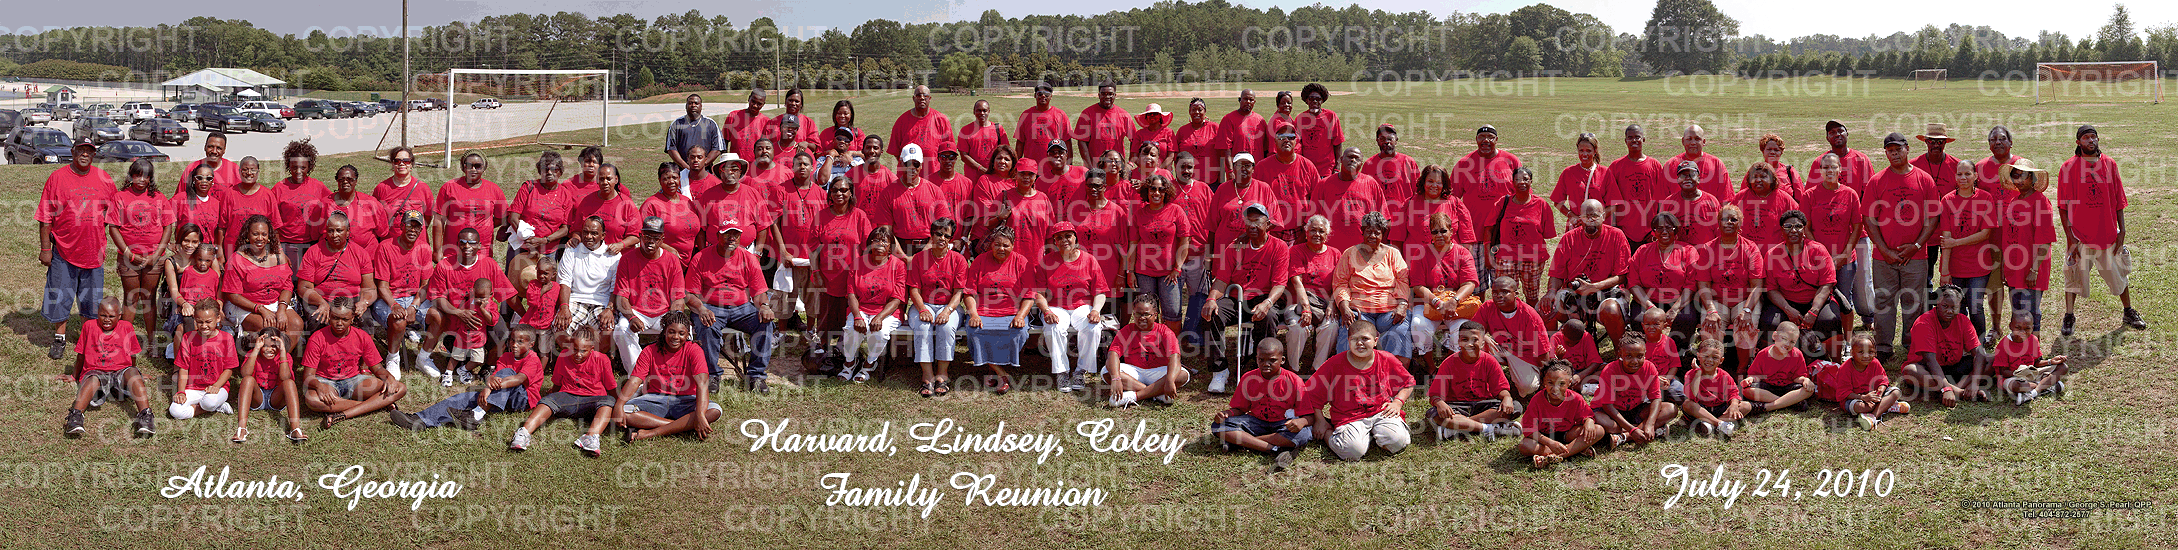 Harvard-Lindsey-Coley_Family_Reunion_Photograph